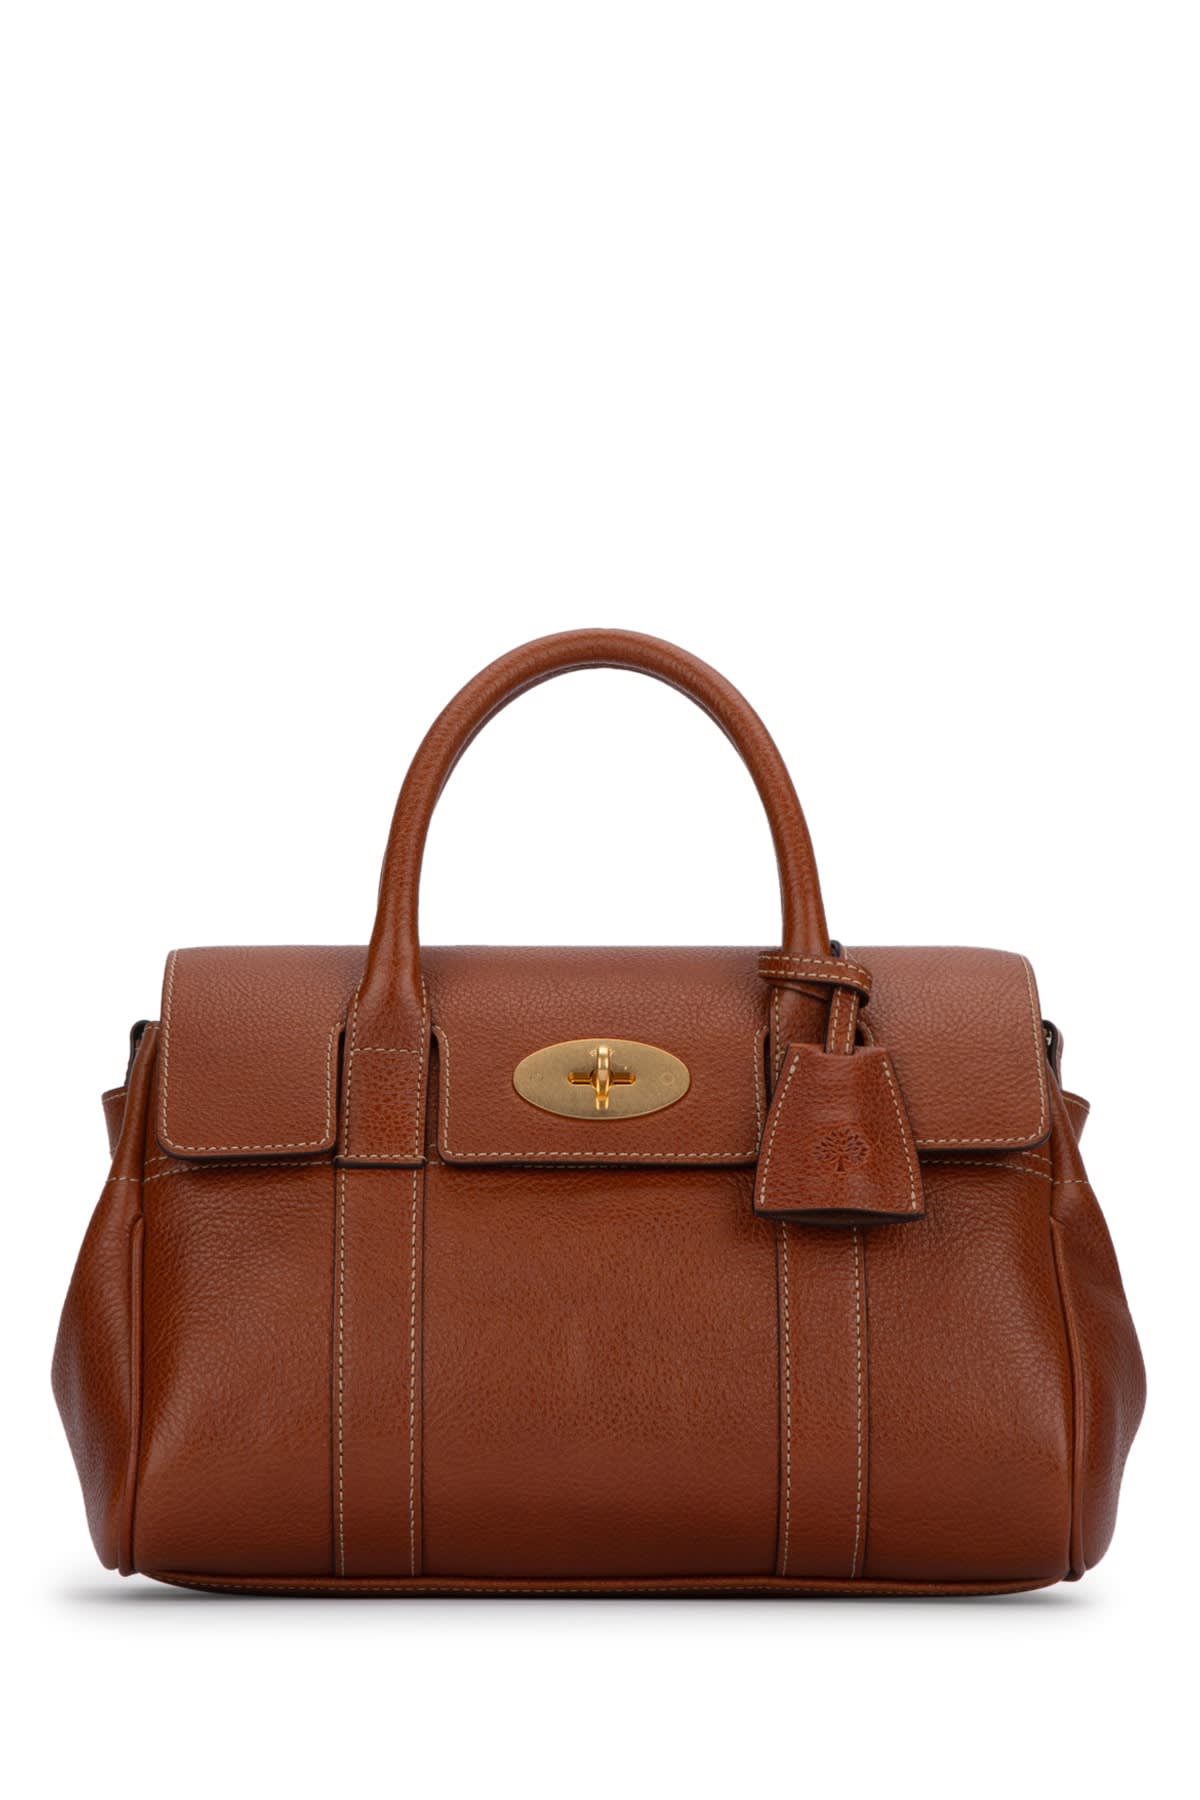 Mulberry Bayswater Brown Leather Handbag  Woman In Oak